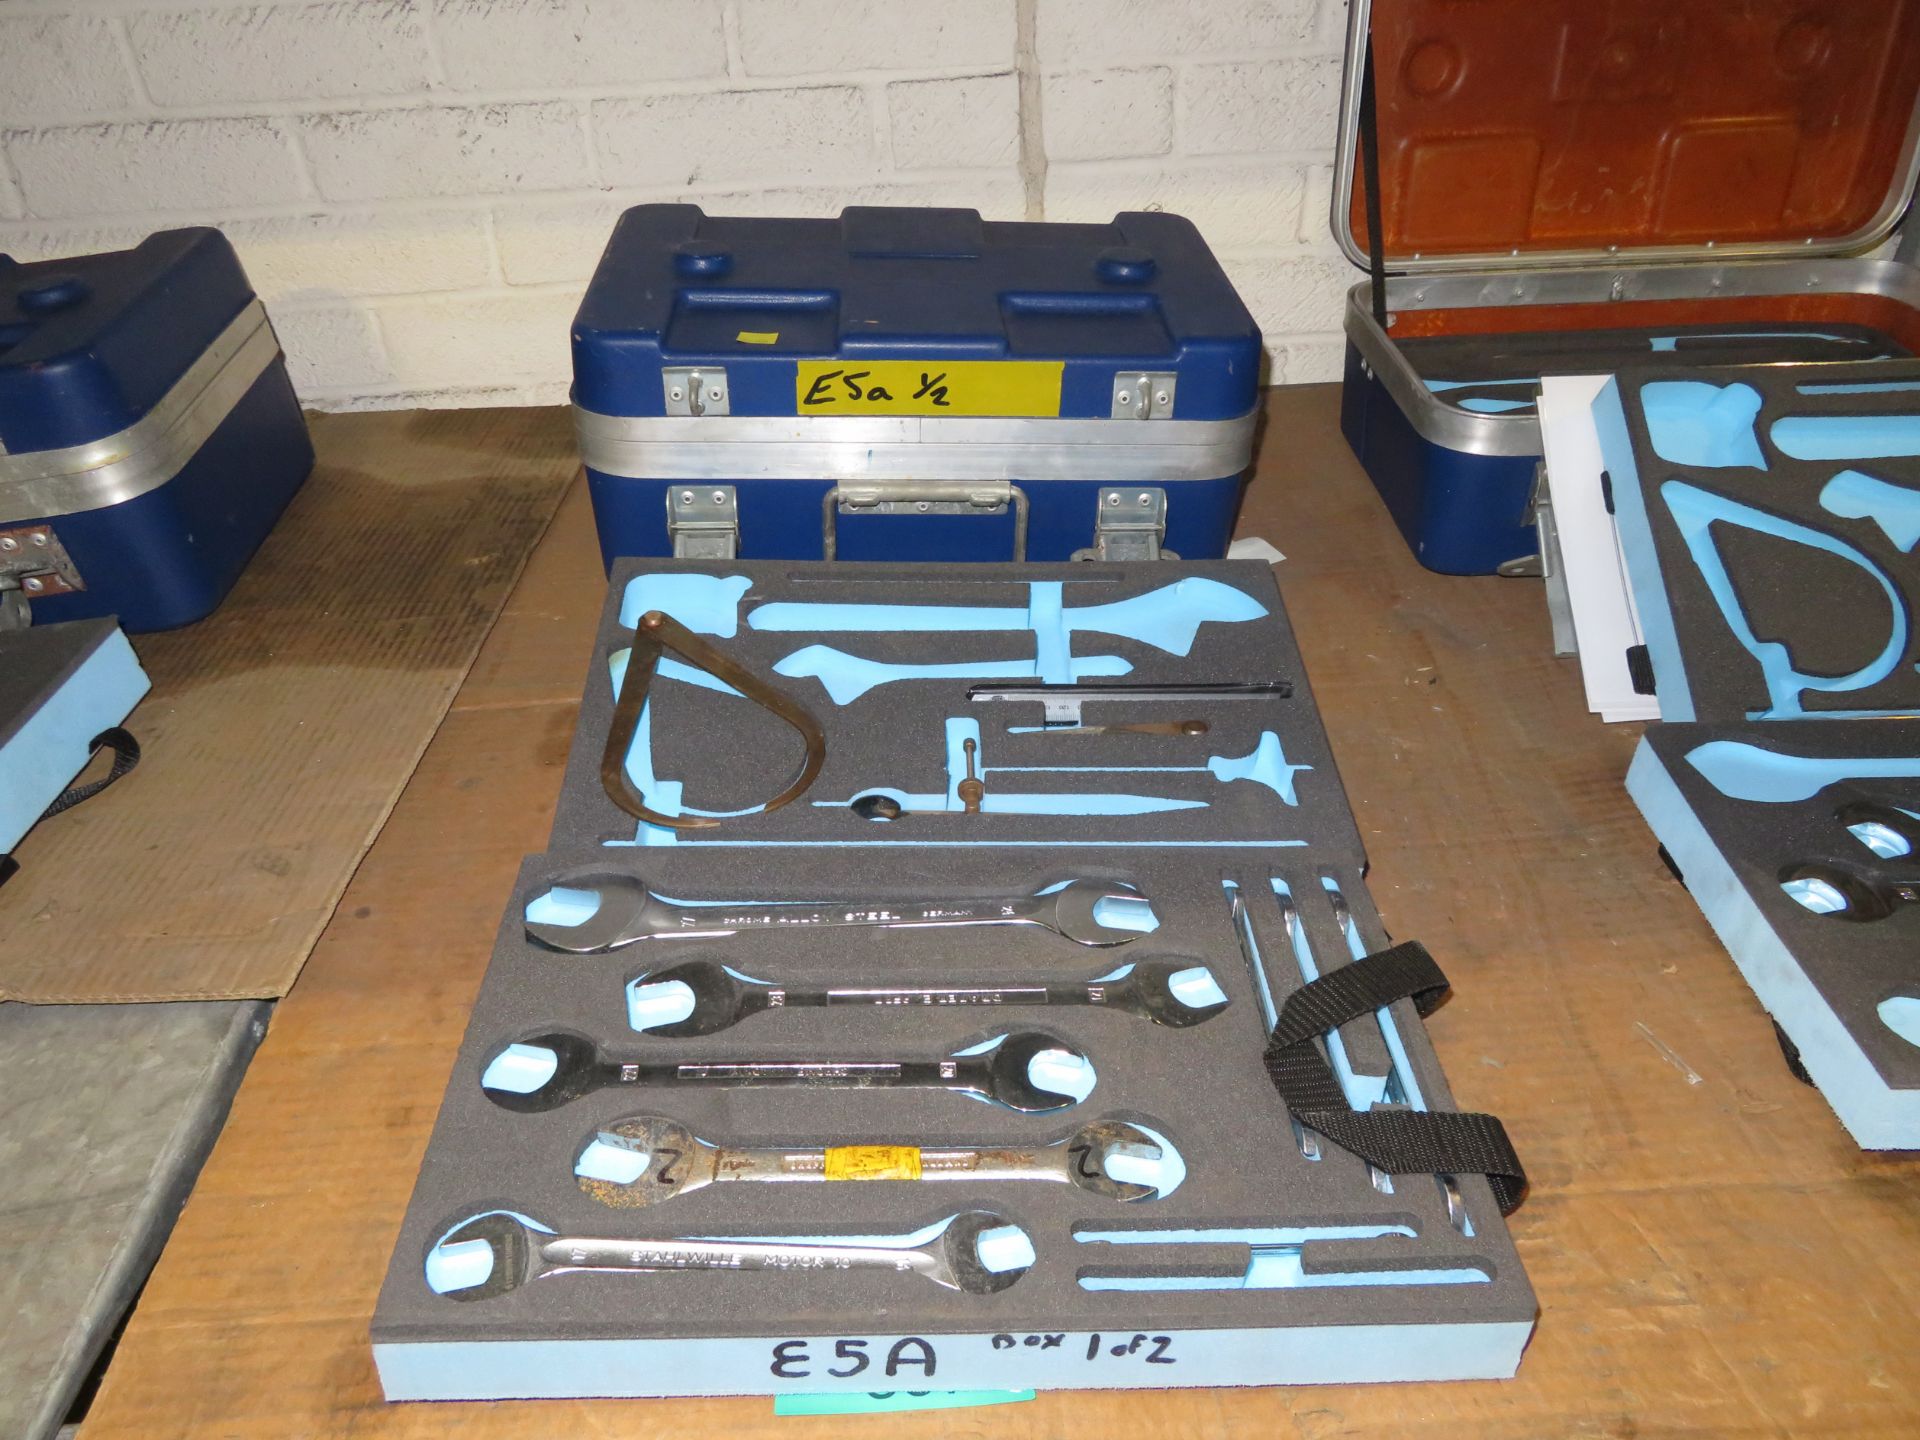 Tools in tool box